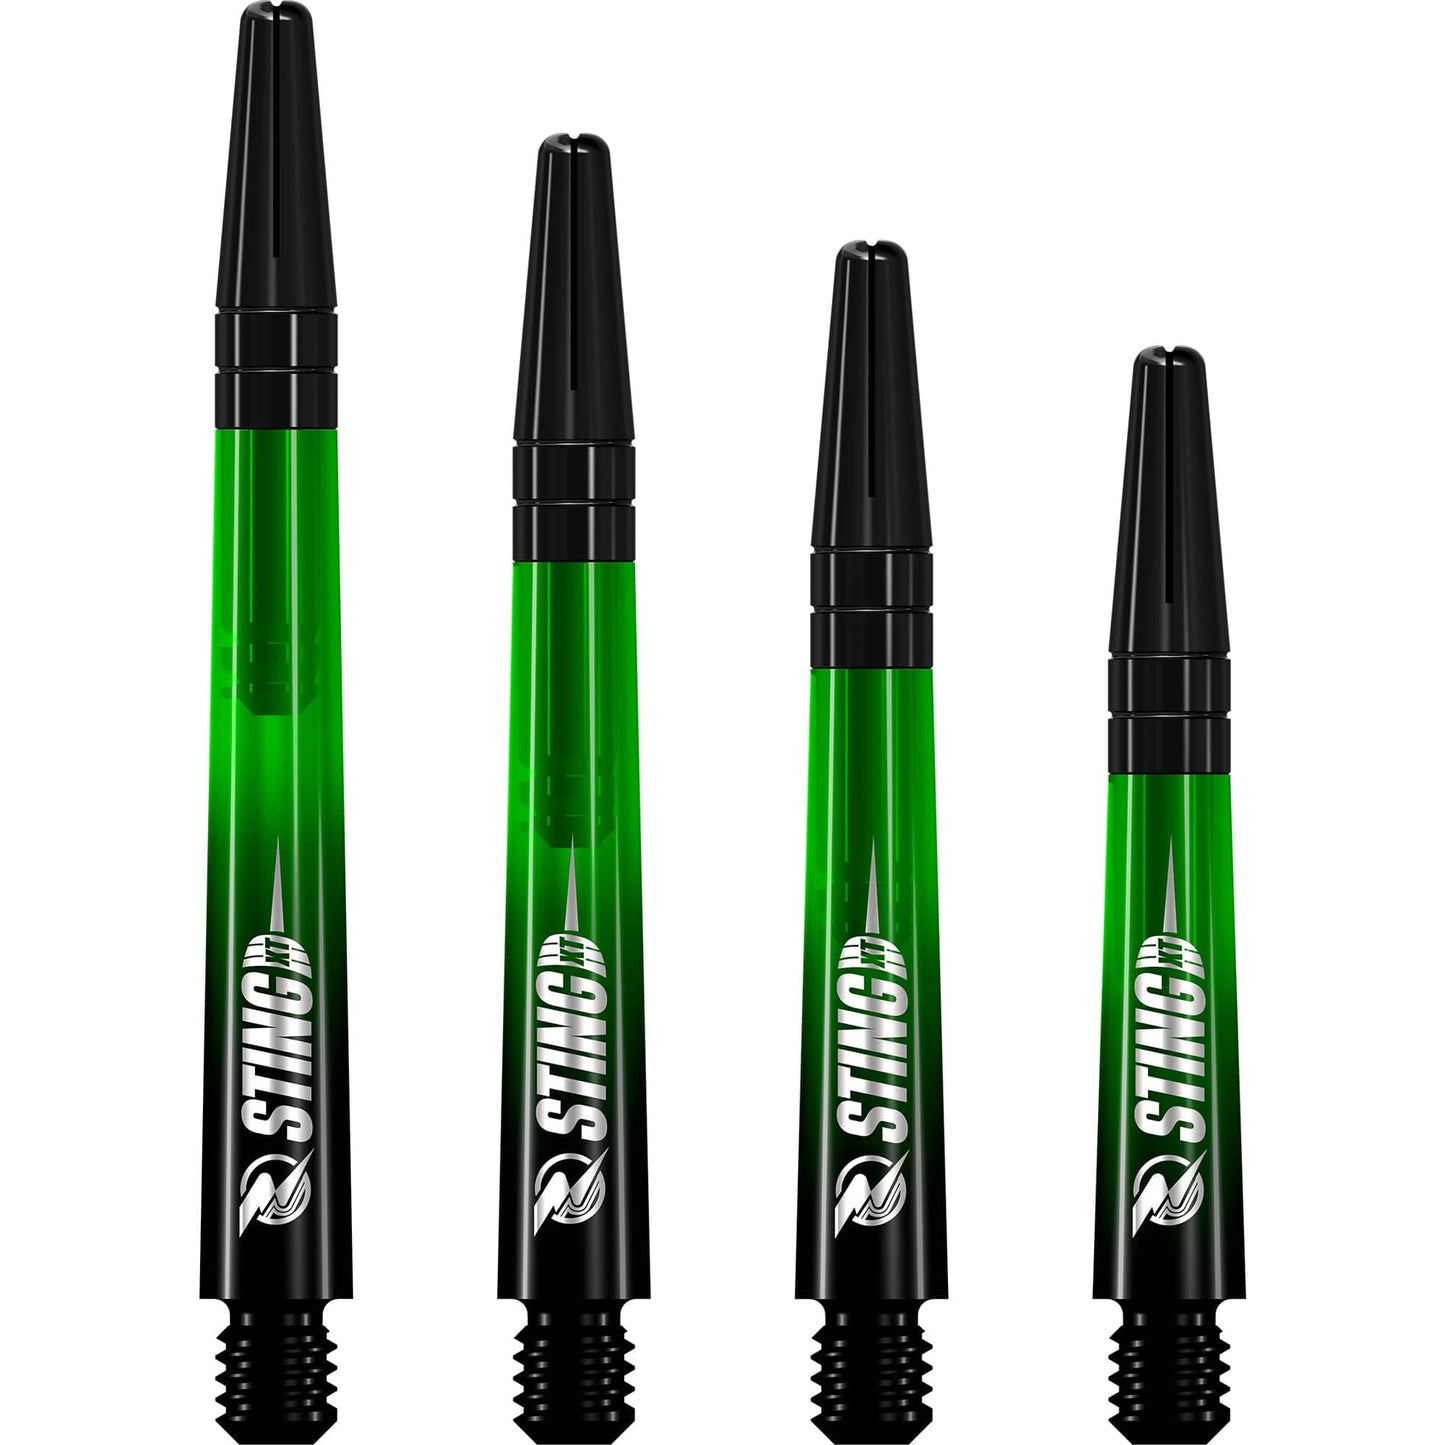 Ruthless Sting XT Dart Shafts - Polycarbonate - Gradient Black & Green - Black Top